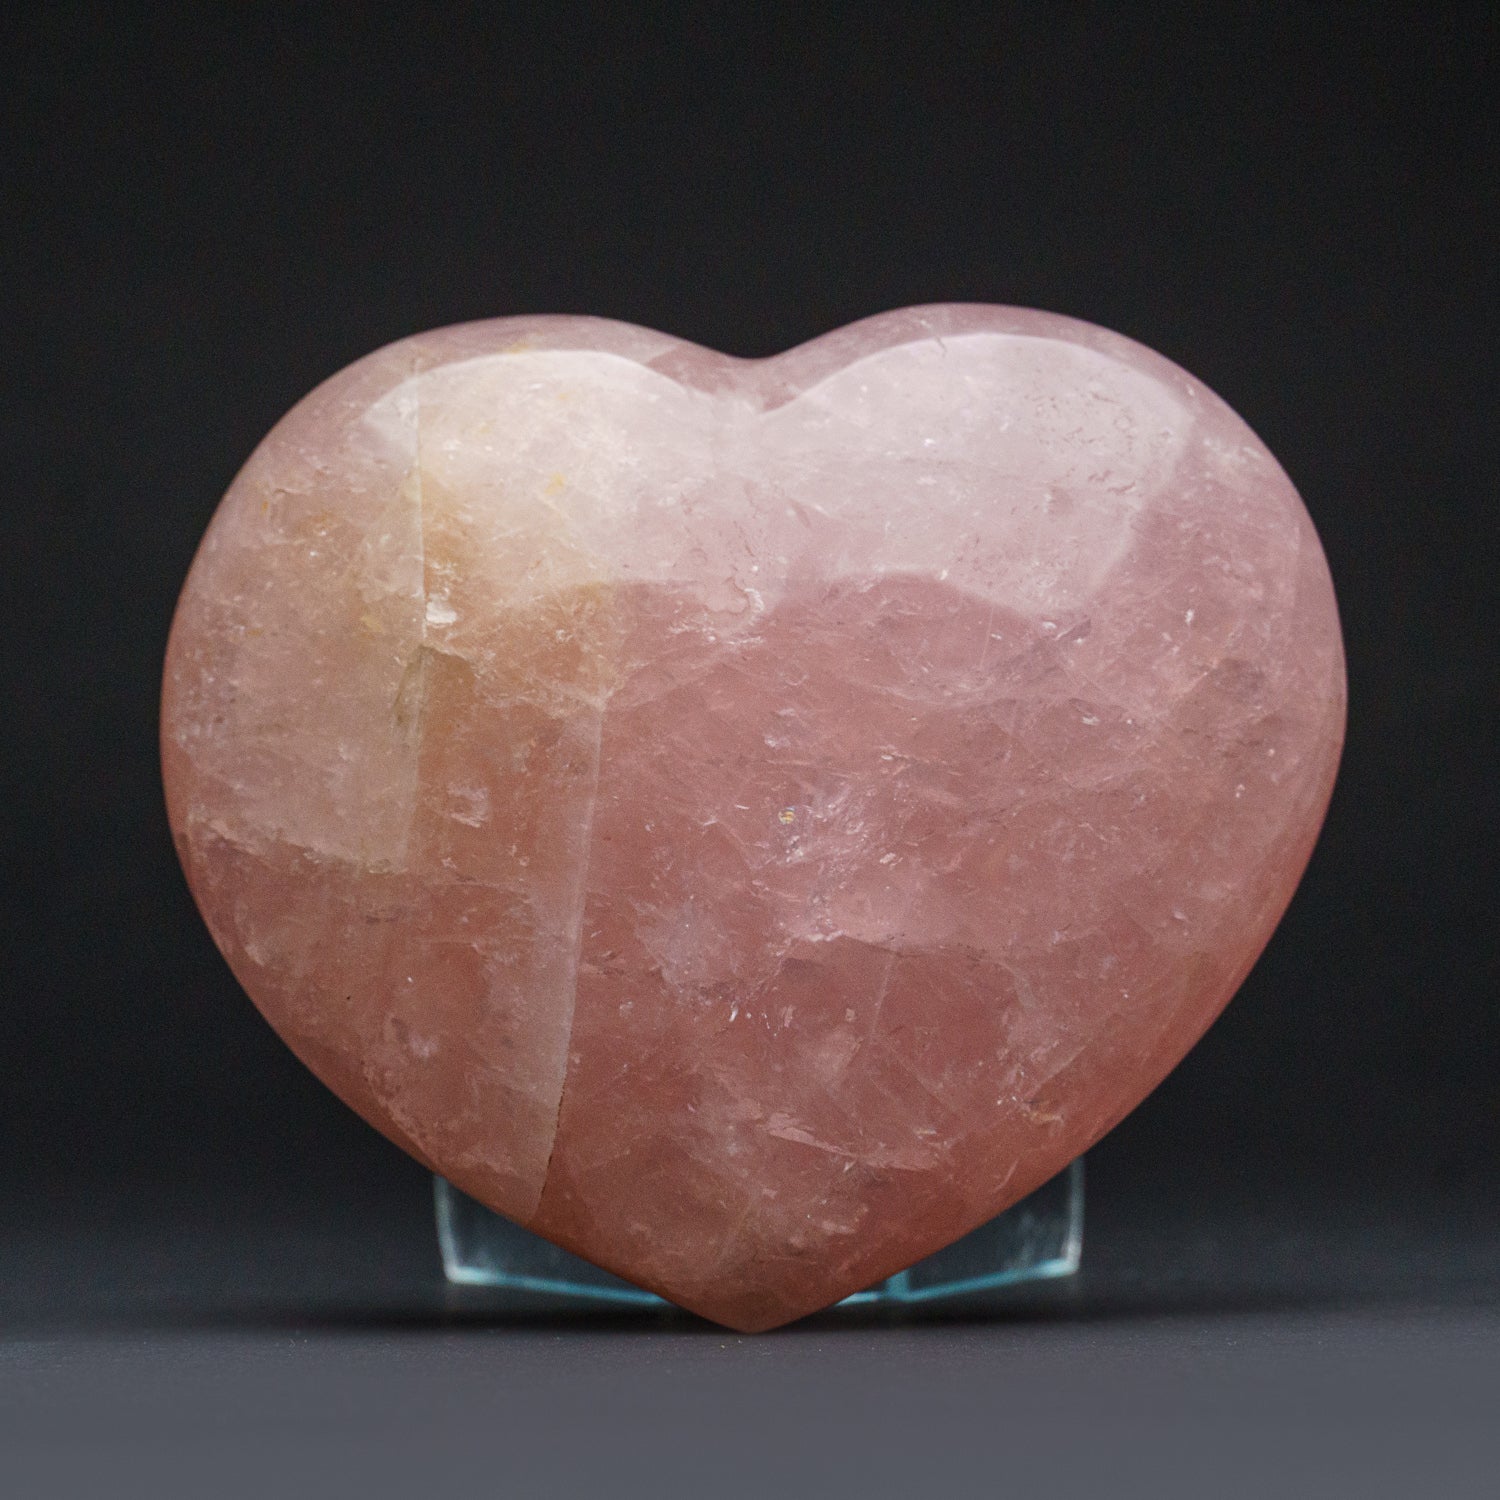 Genuine Polished Rose Quartz Heart from Brazil (1.4 lbs)